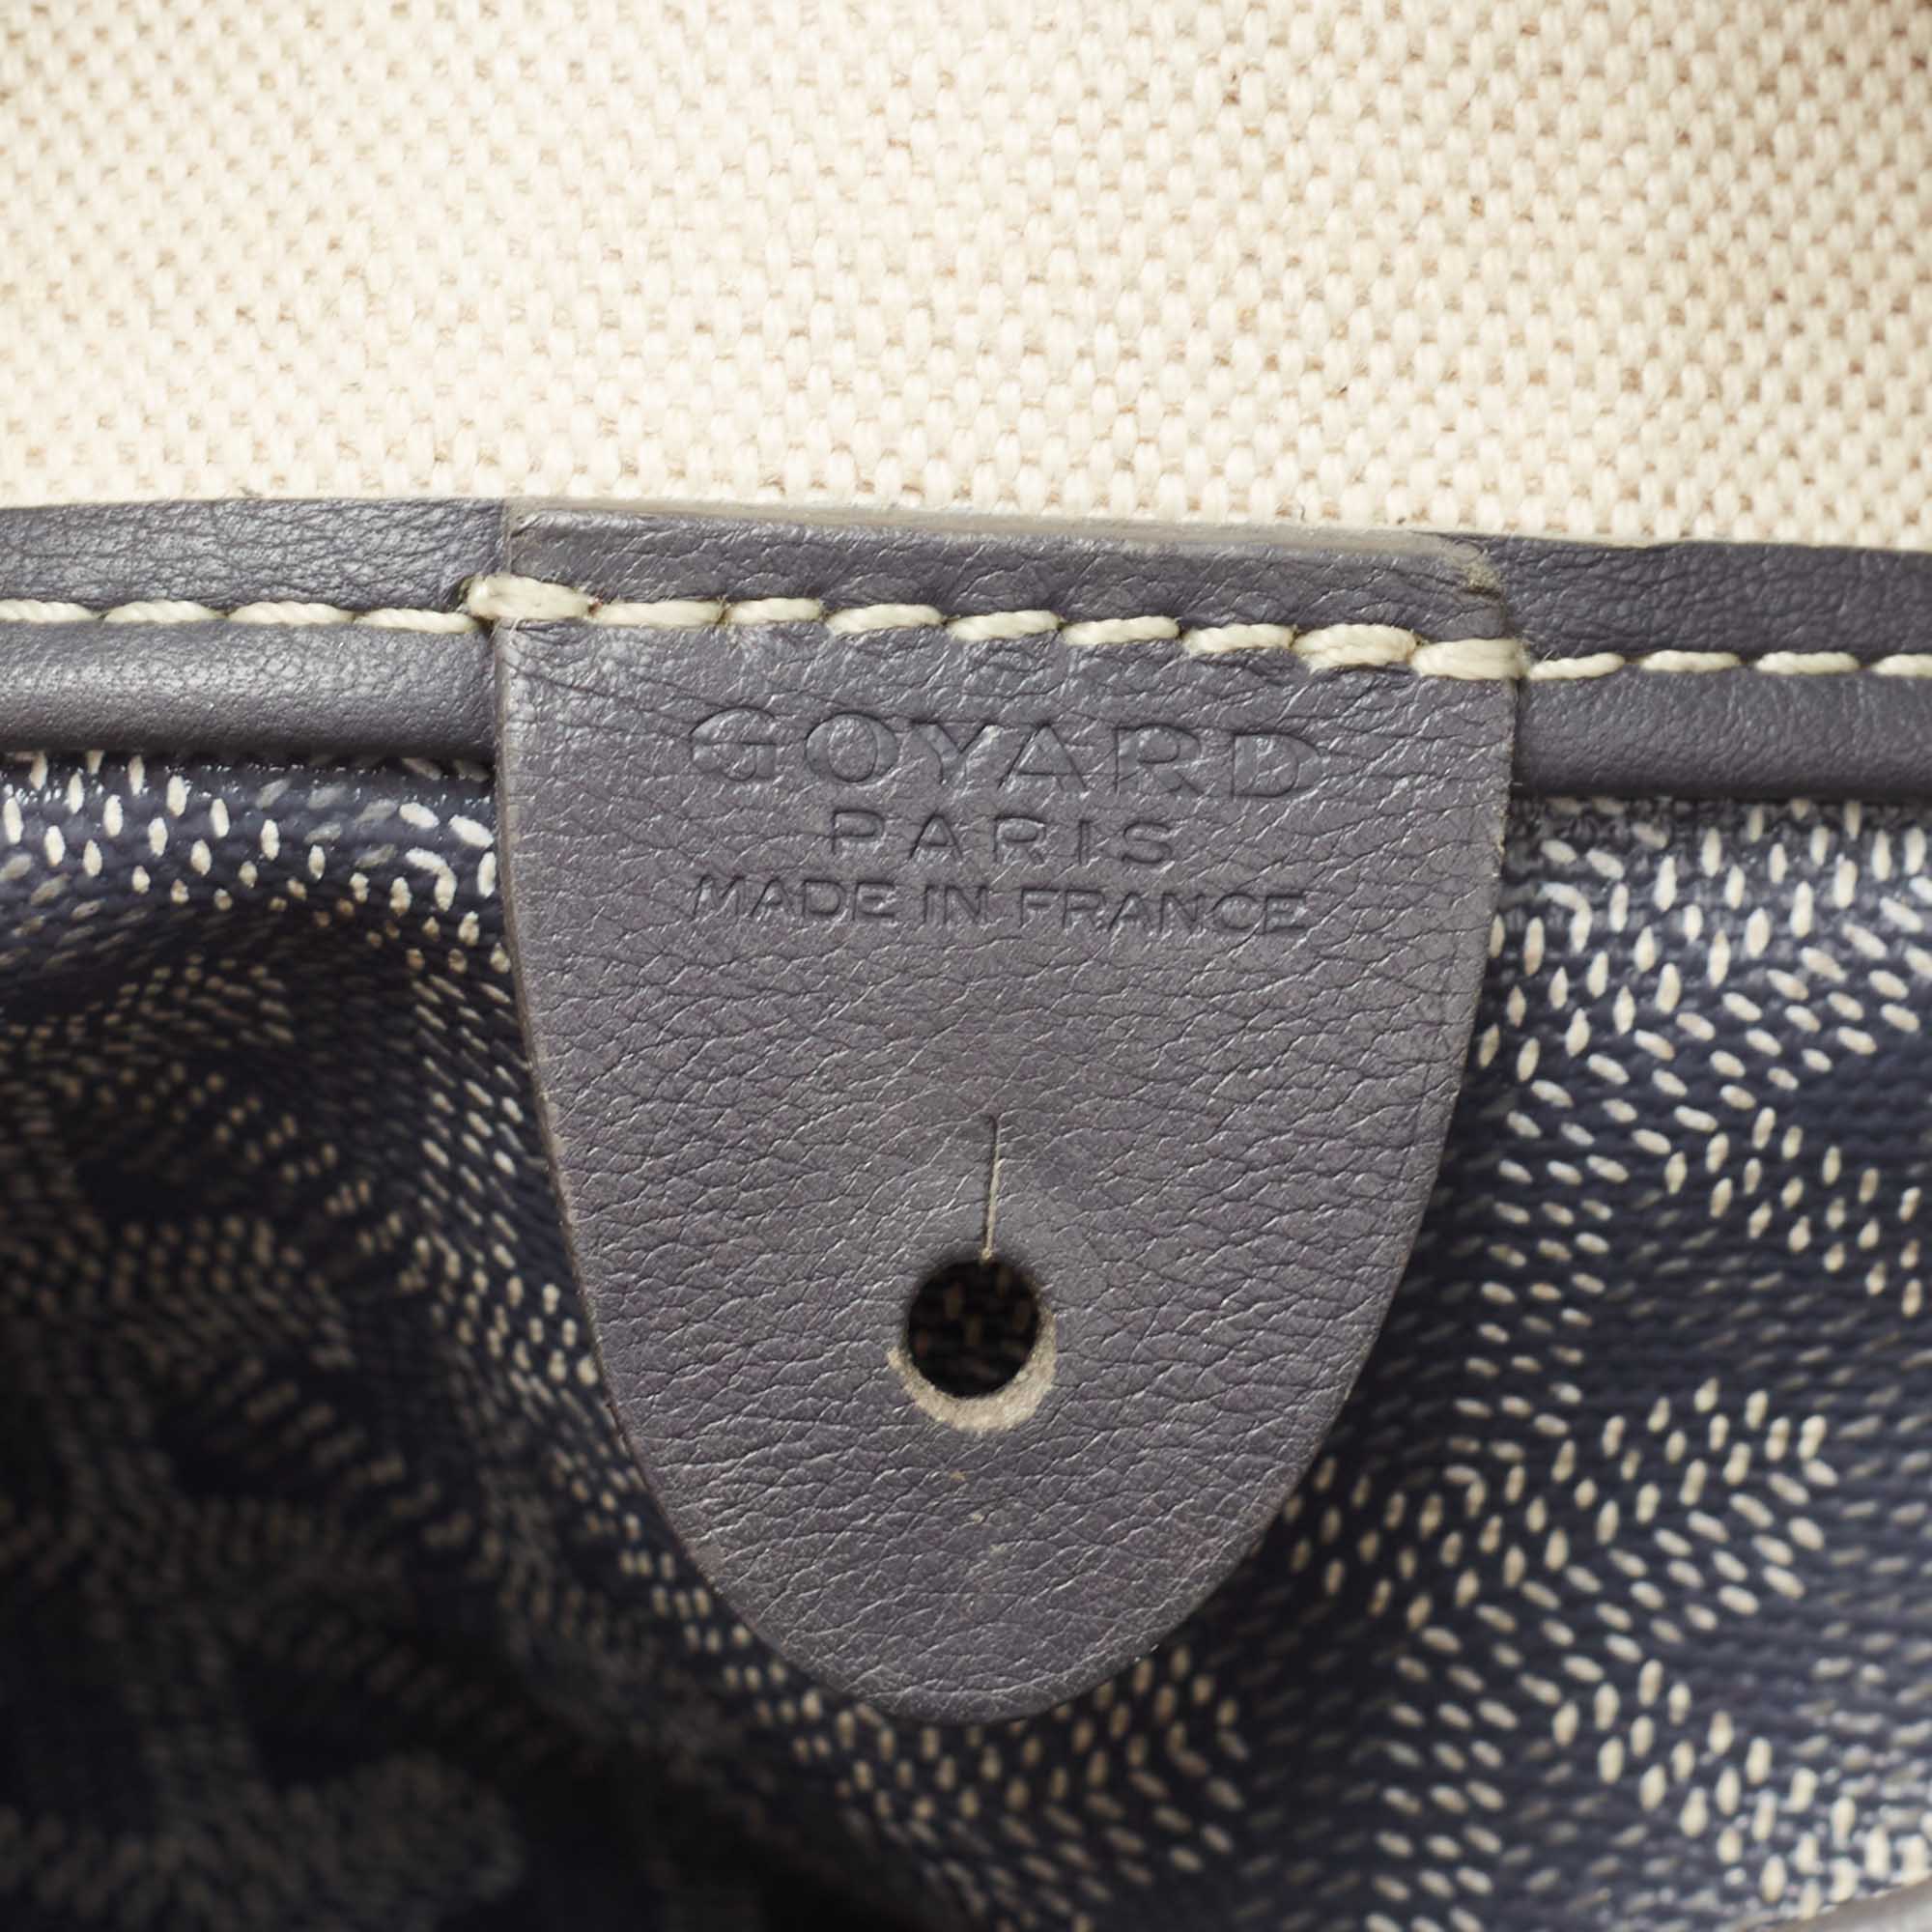 Goyard Goyard Artois Tote Canvas MM Handbag In Aqua Blue RRP £5000